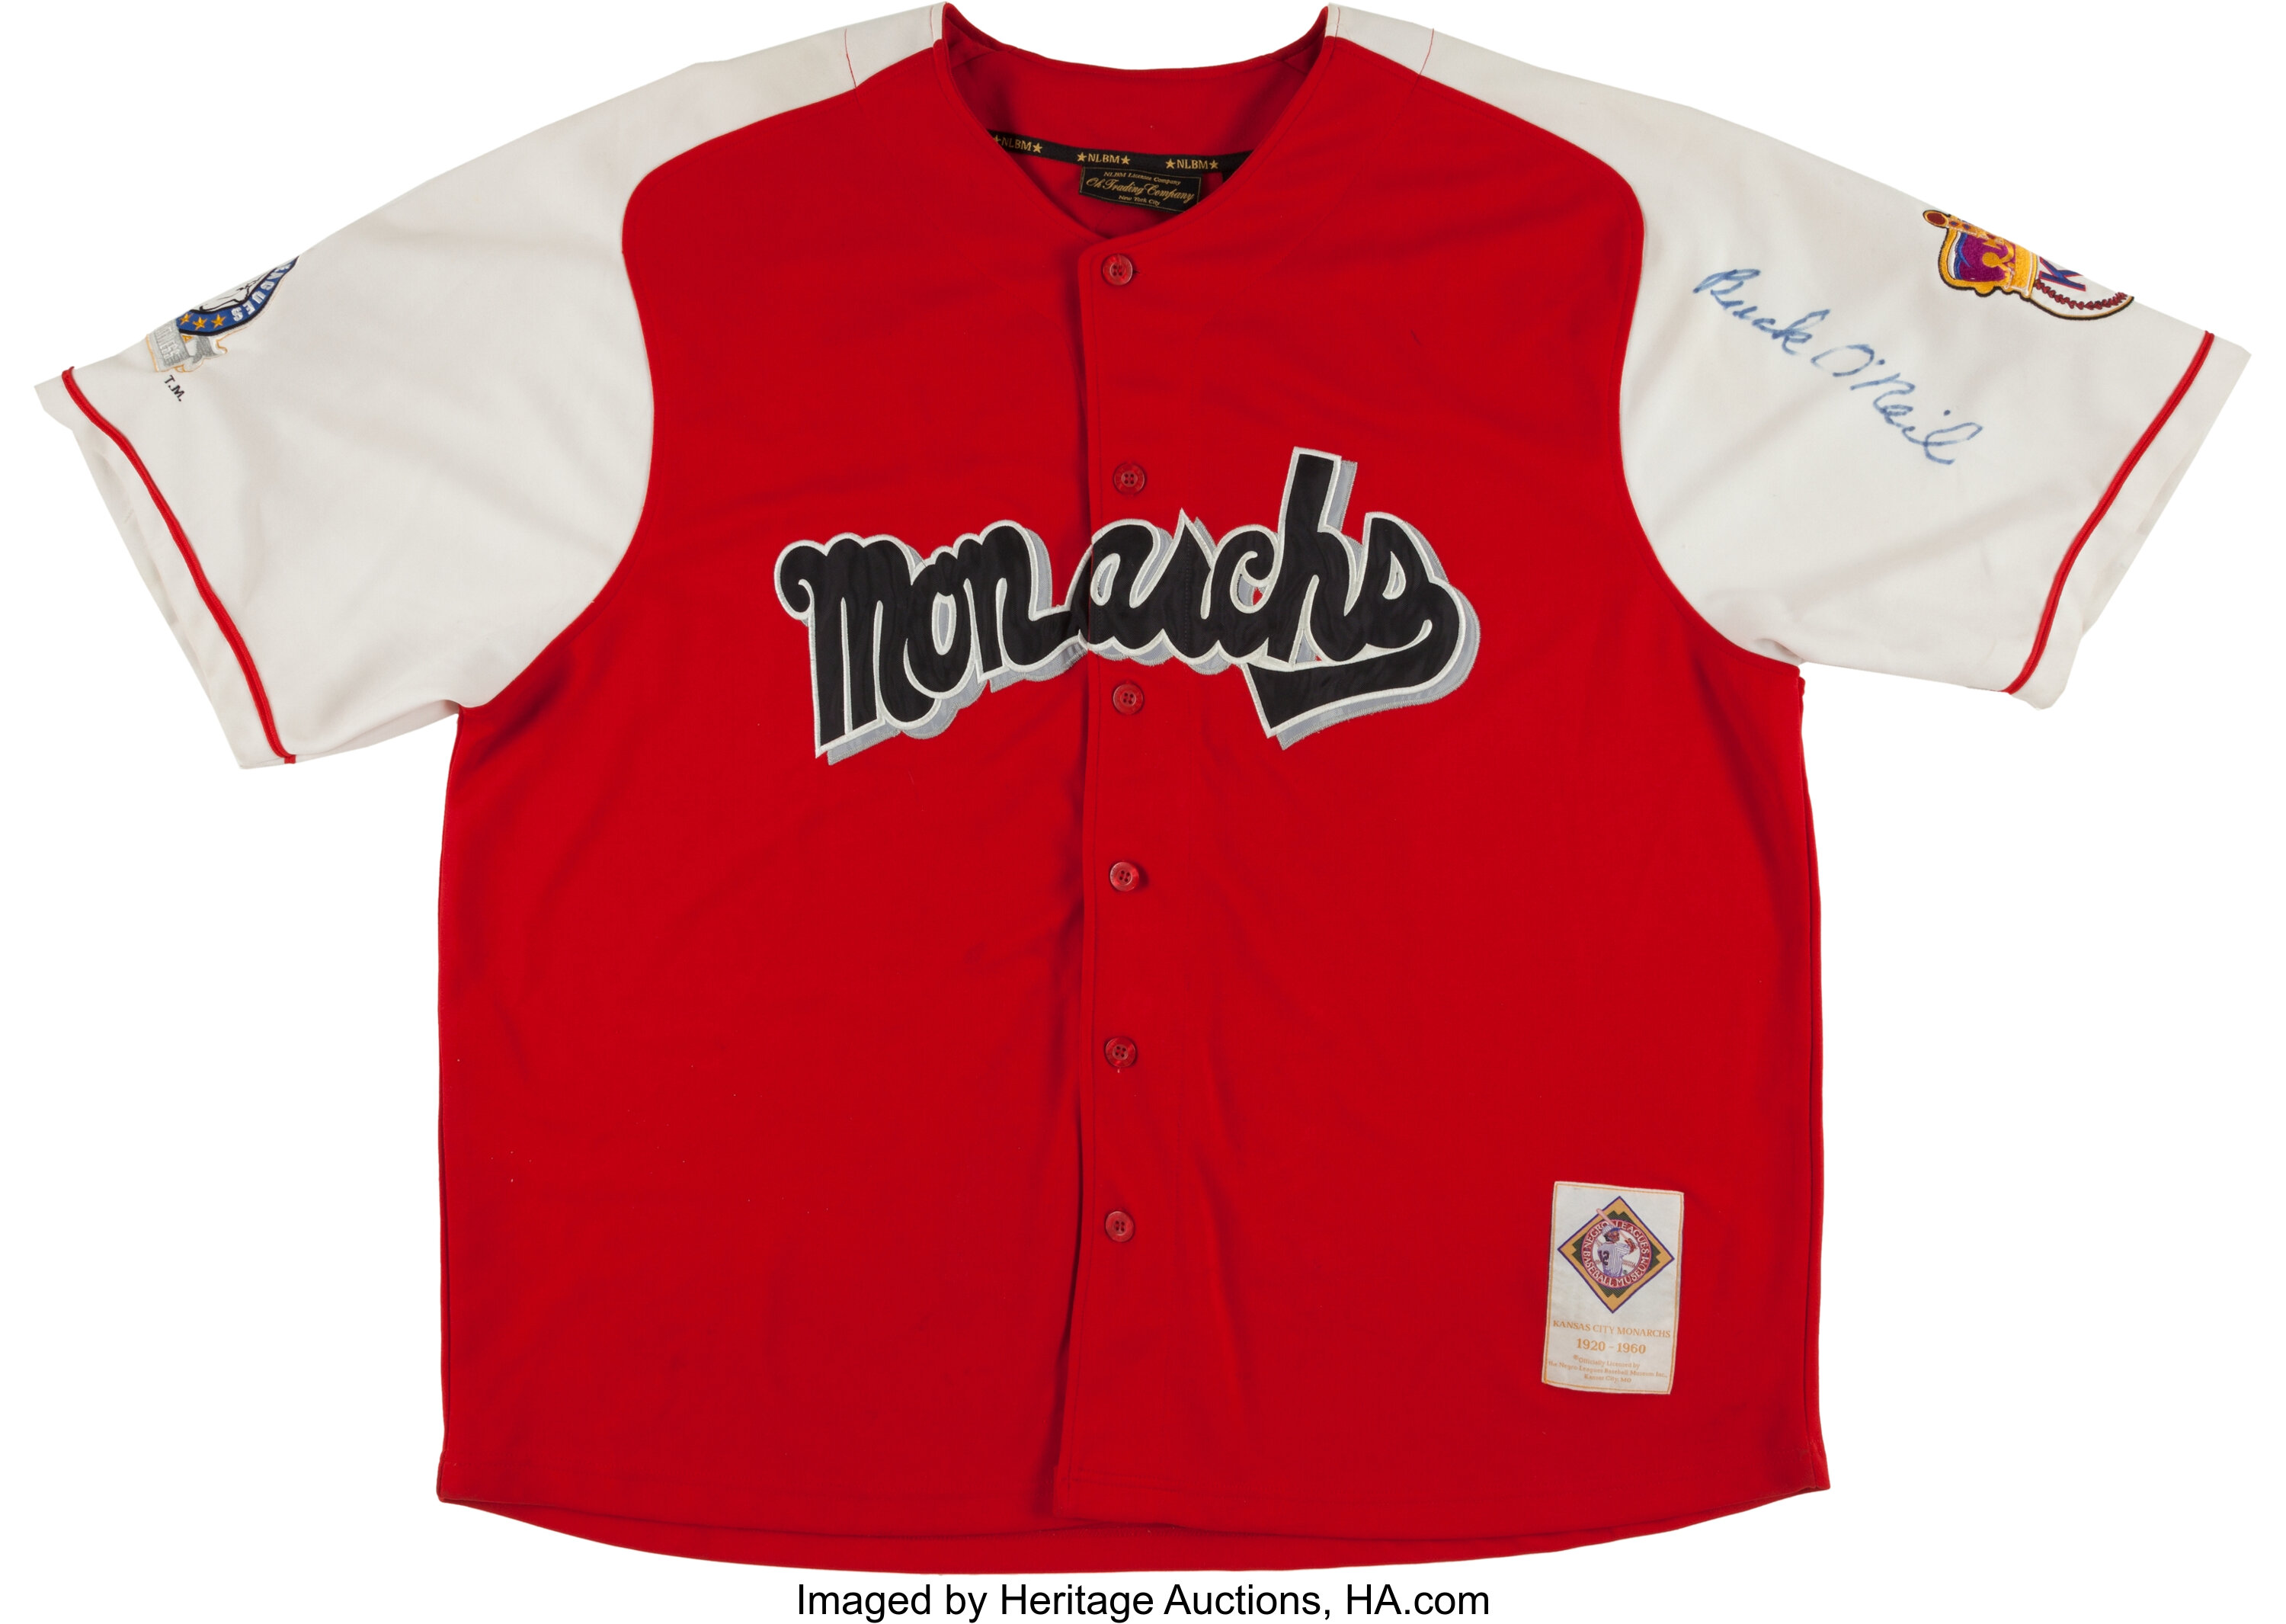 Buck O'Neil Signed Monarchs Jersey. Autographs Baseballs, Lot #40078